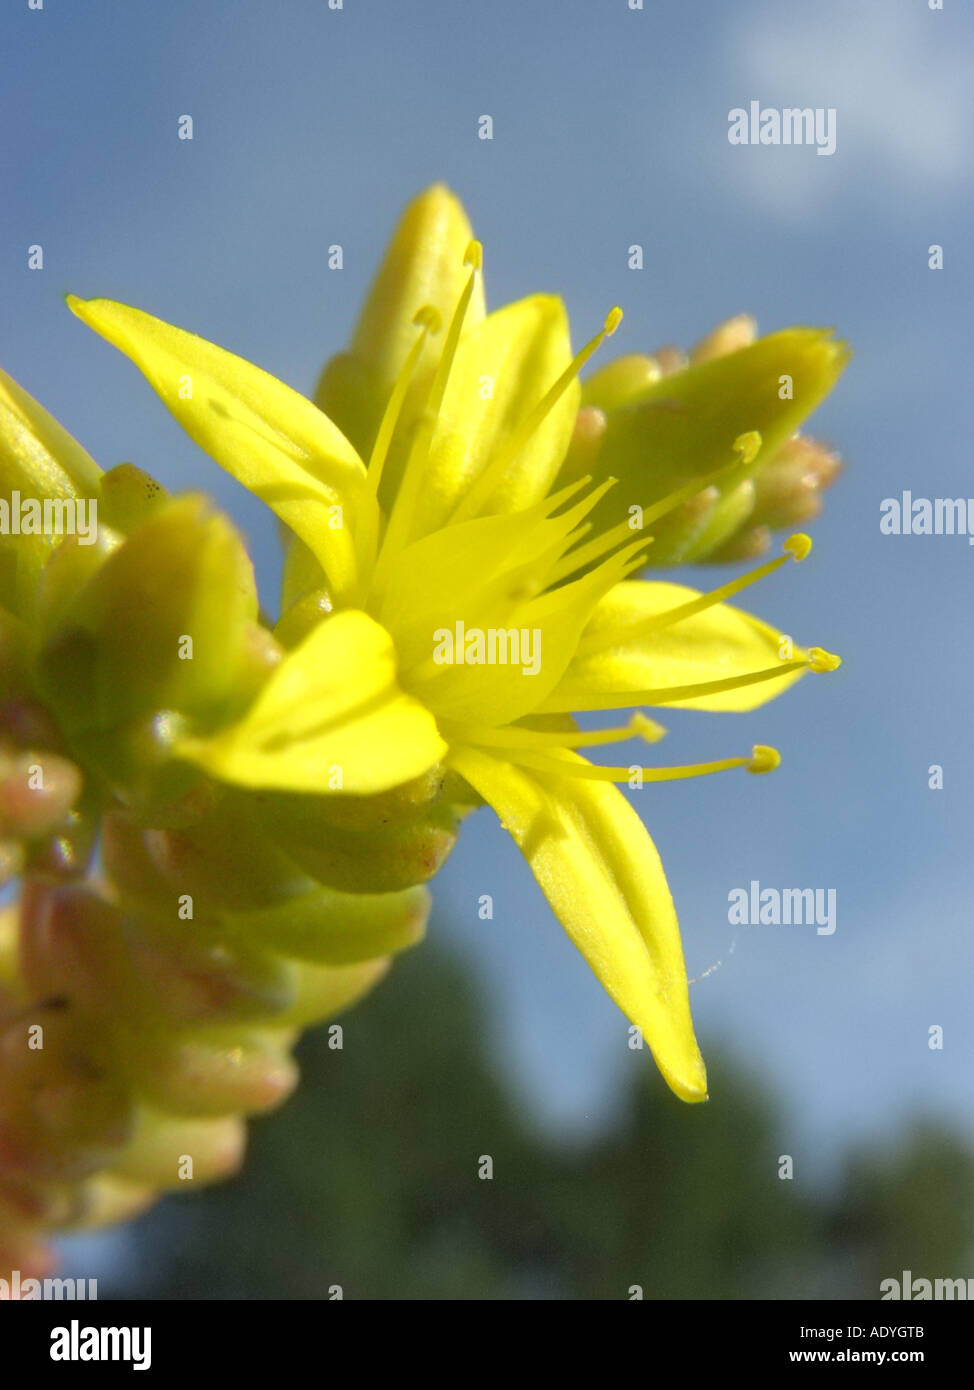 common stonecrop, biting stonecrop, mossy stonecrop, wall-pepper, gold-moss (Sedum acre), single flower Stock Photo